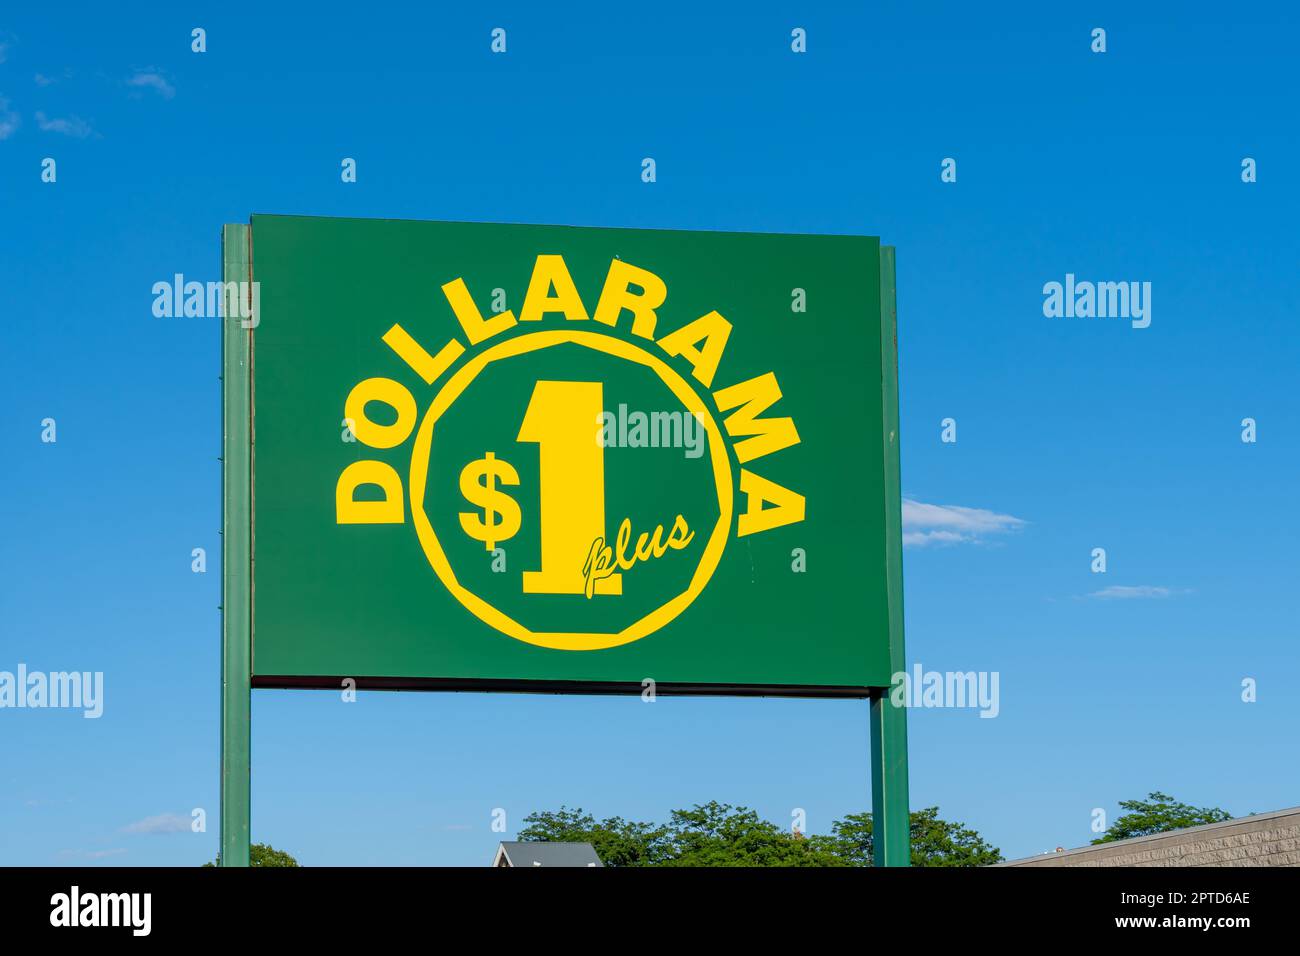 Niagara Falls, ON, Canada - 29 juin 2022 : un panneau de poteau de magasin Dollarama contre le ciel bleu est montré. Banque D'Images